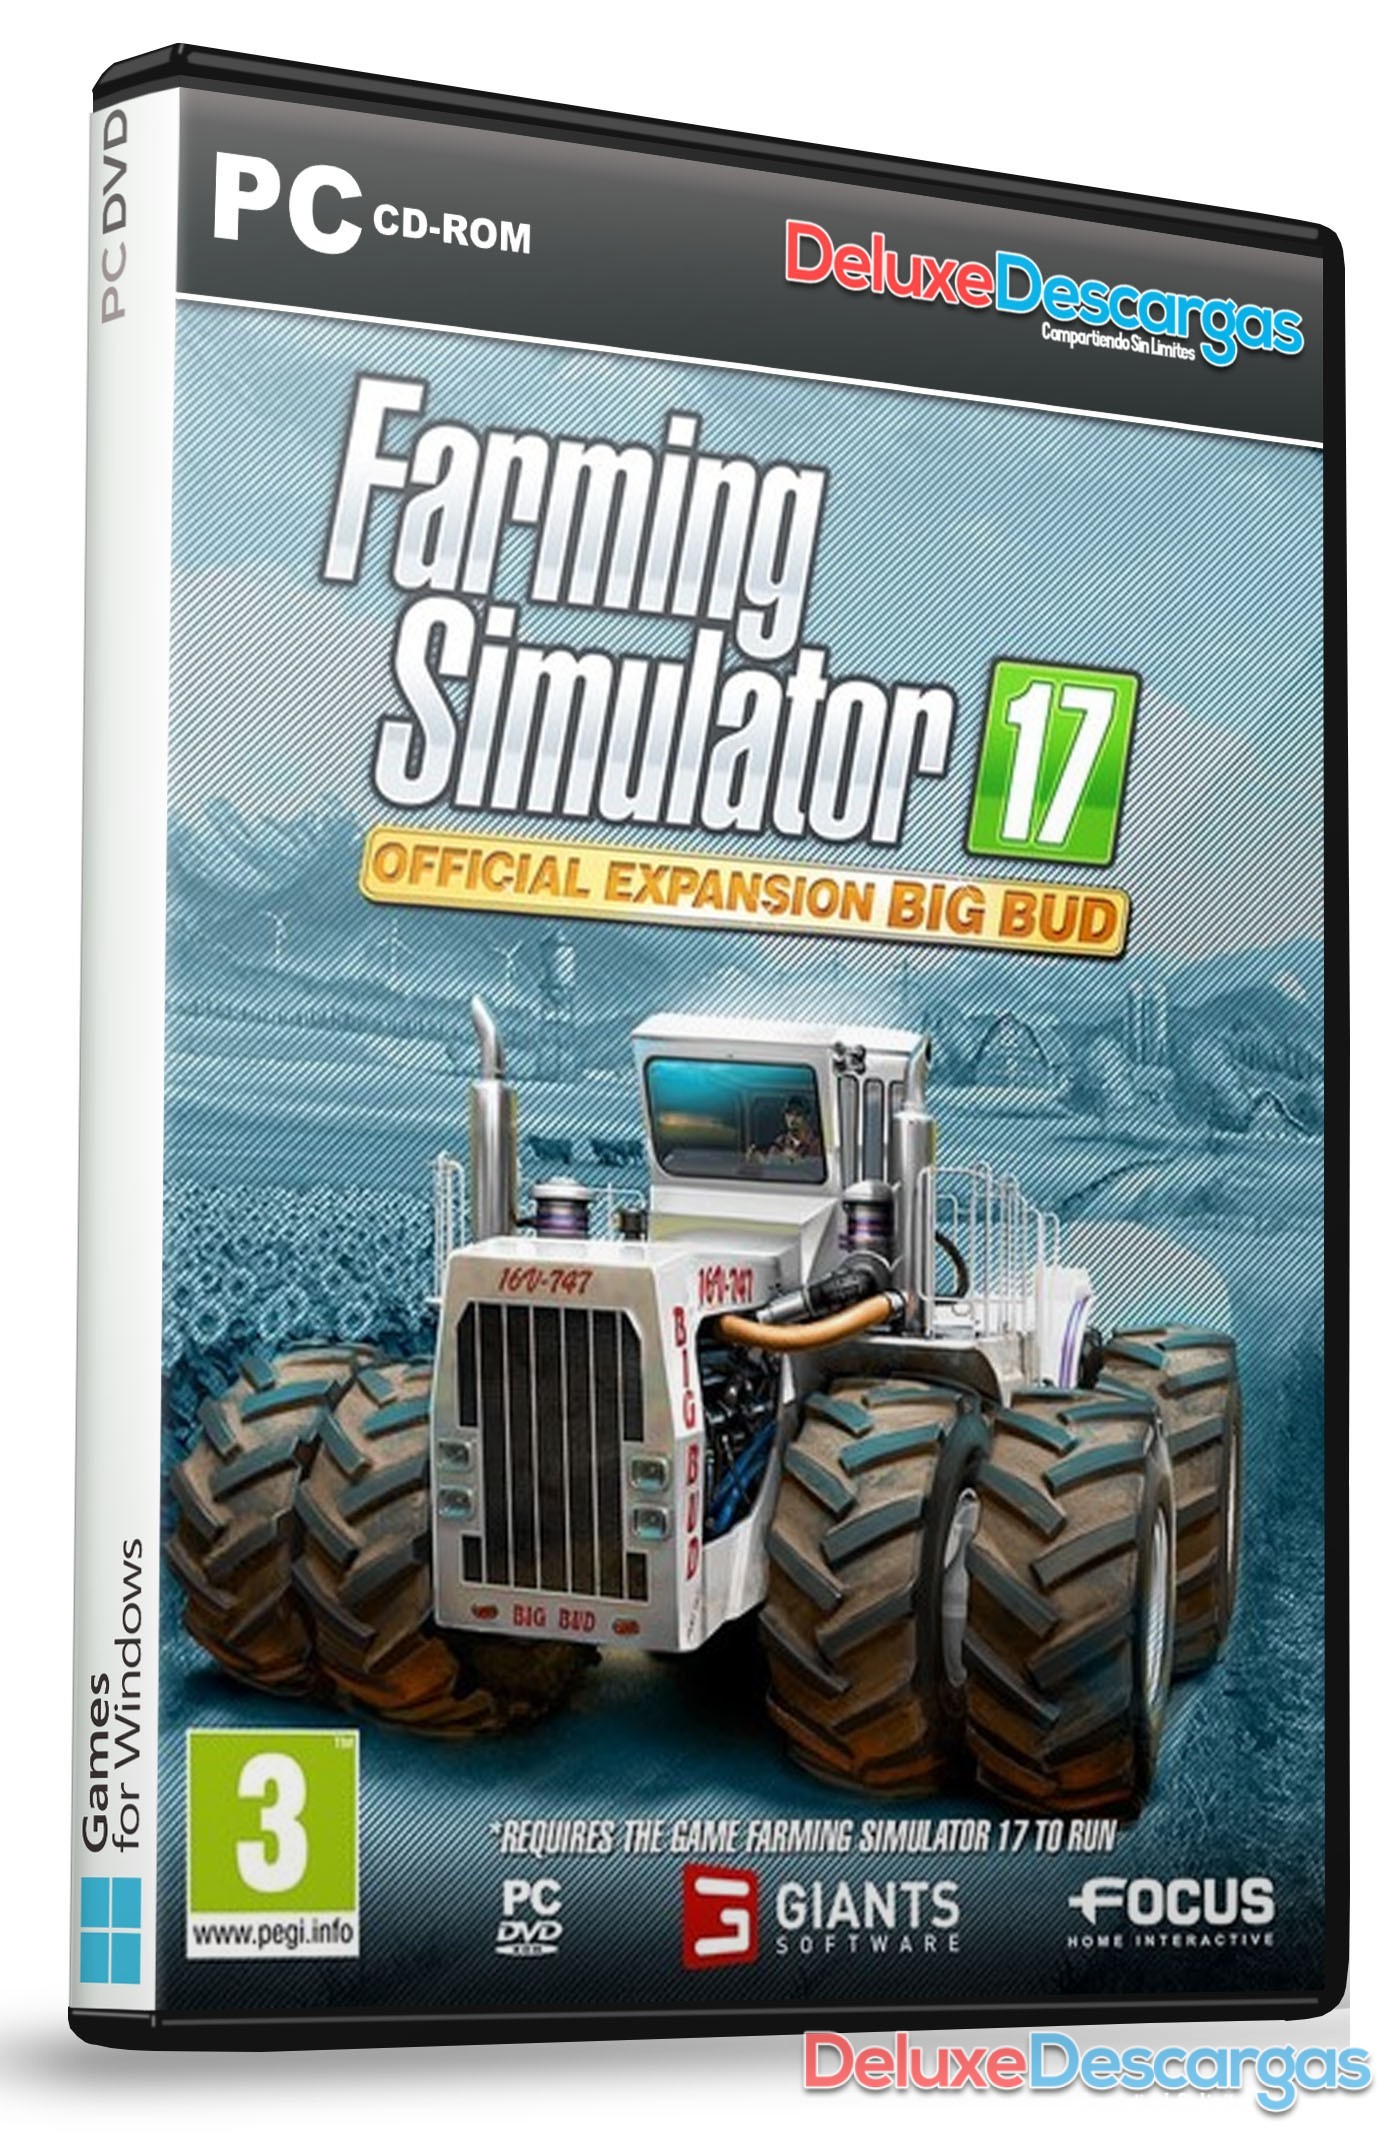 download farming simulator 22 daggerwin for free